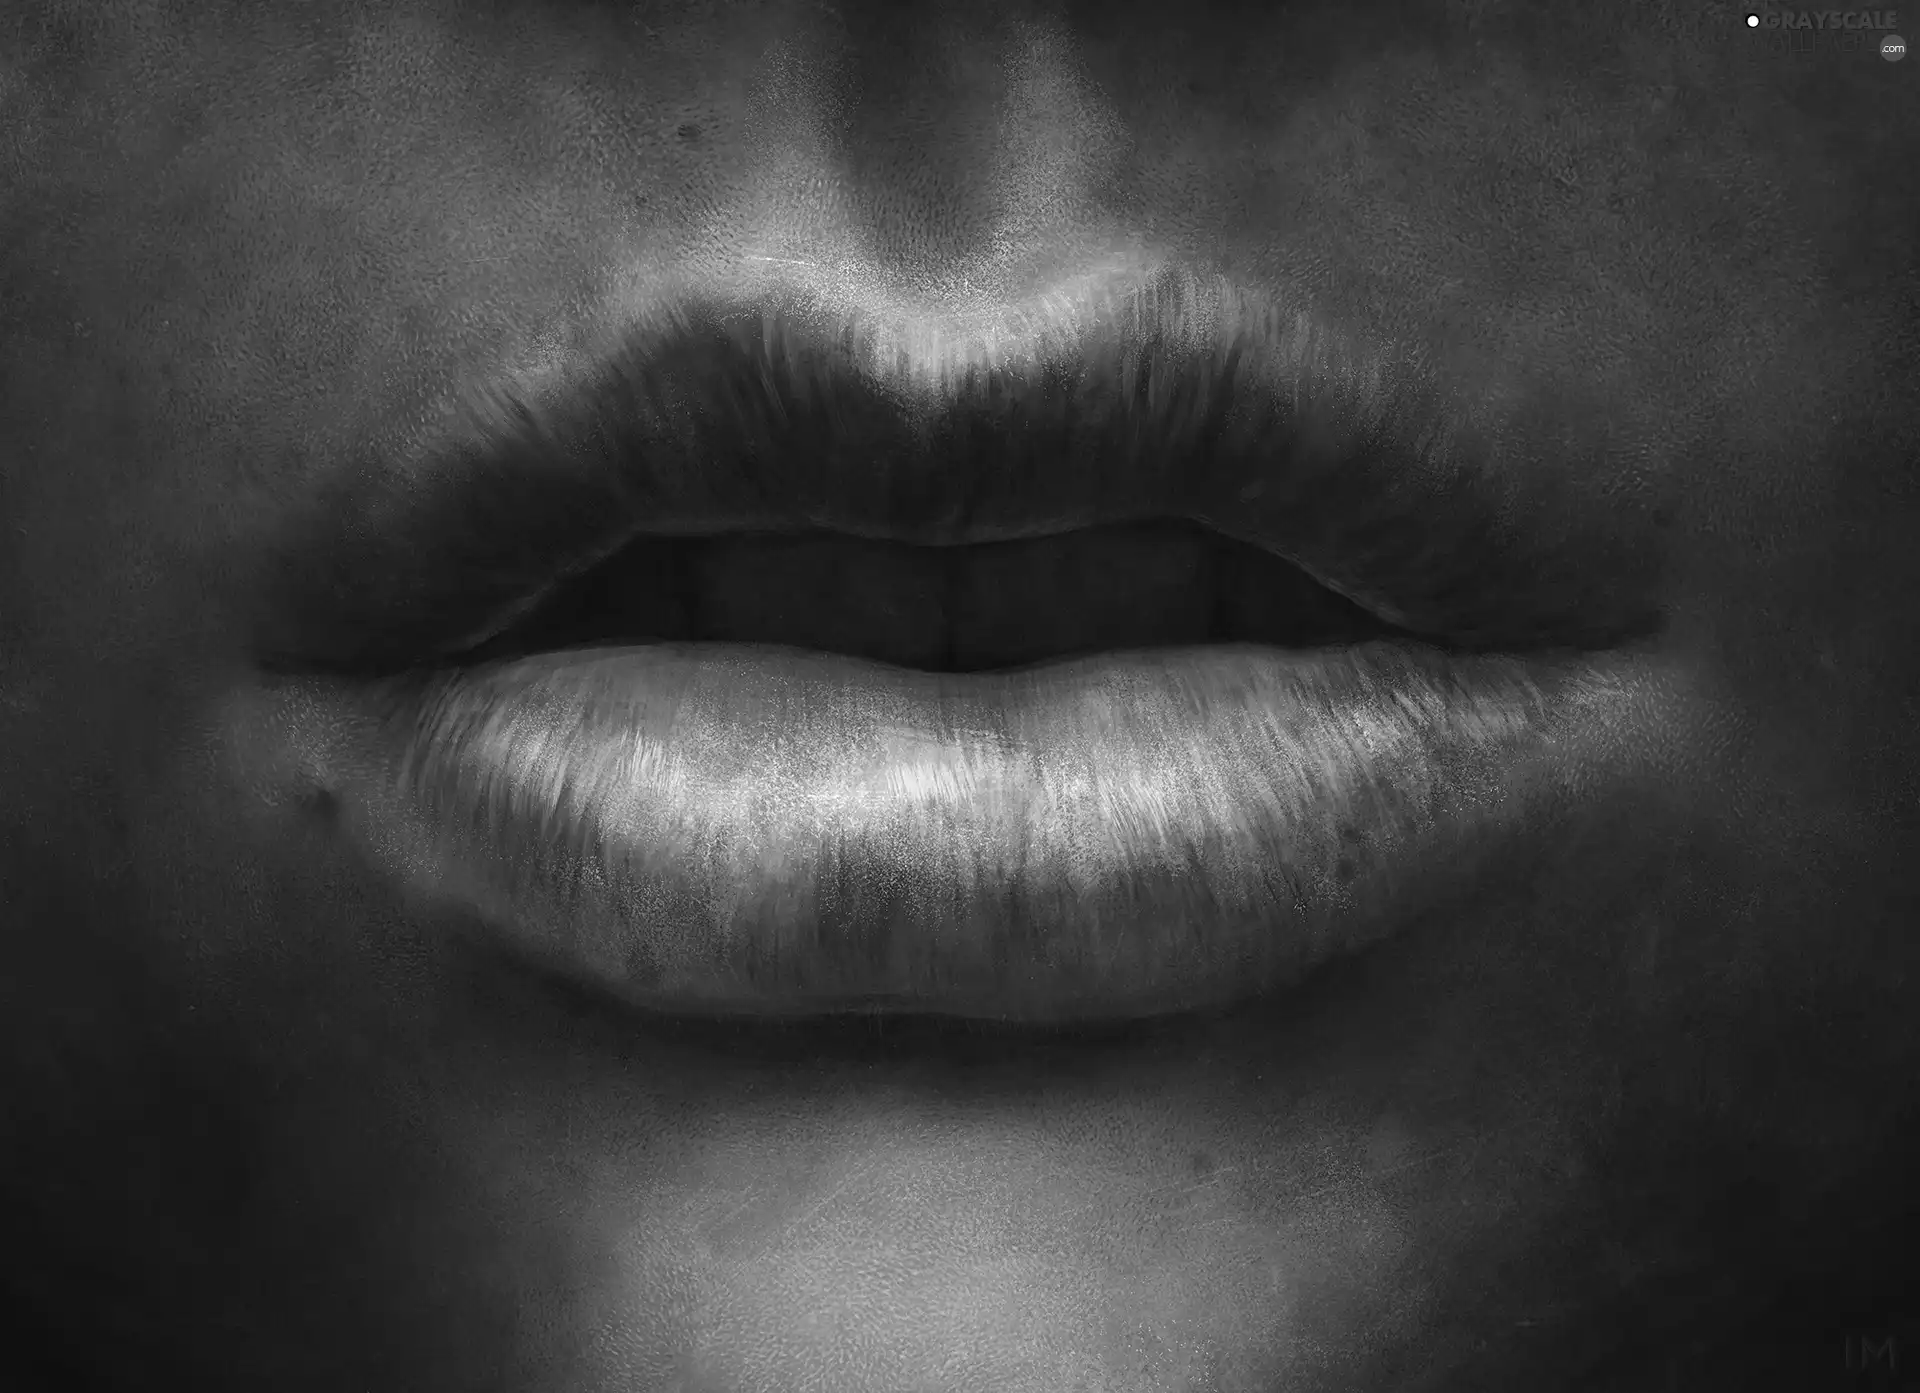 reproductions, Isabella Morawetz, lips, image